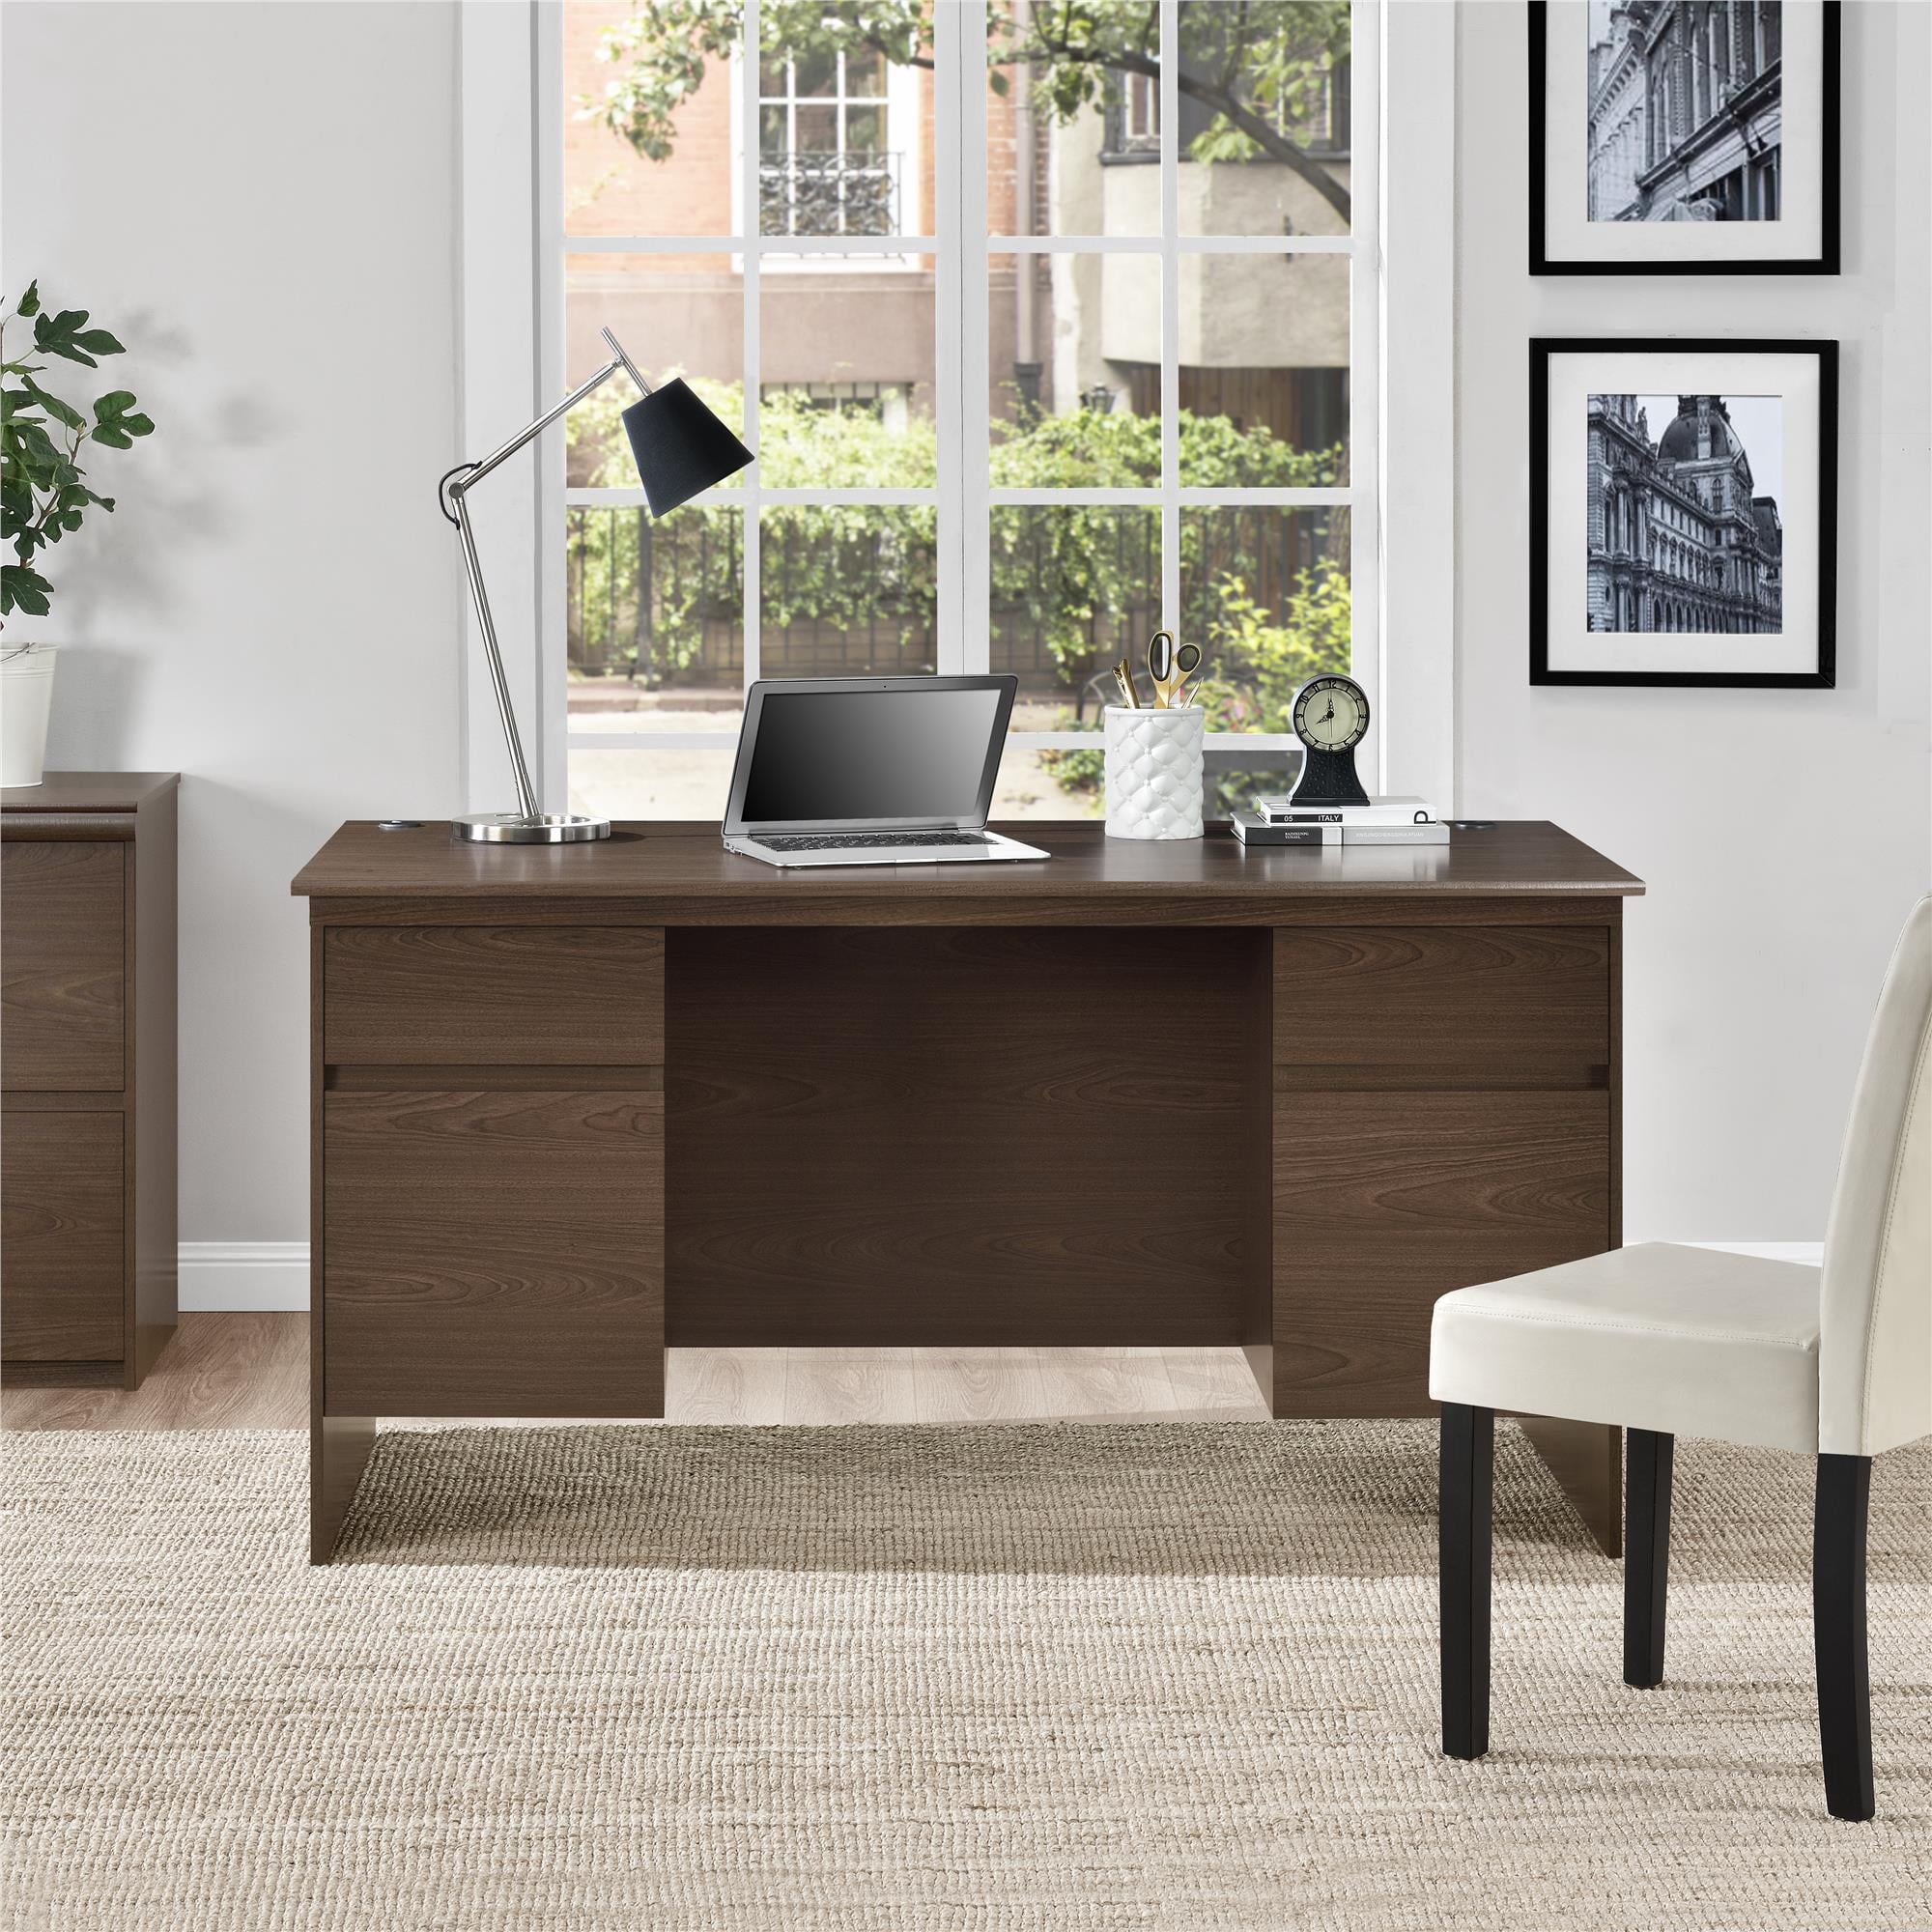 Large 94 Walnut Executive Desk, Office Computer Desk, Industrial Desk,  Solid Walnut Office Desk With Drawers, Home Office Desk 